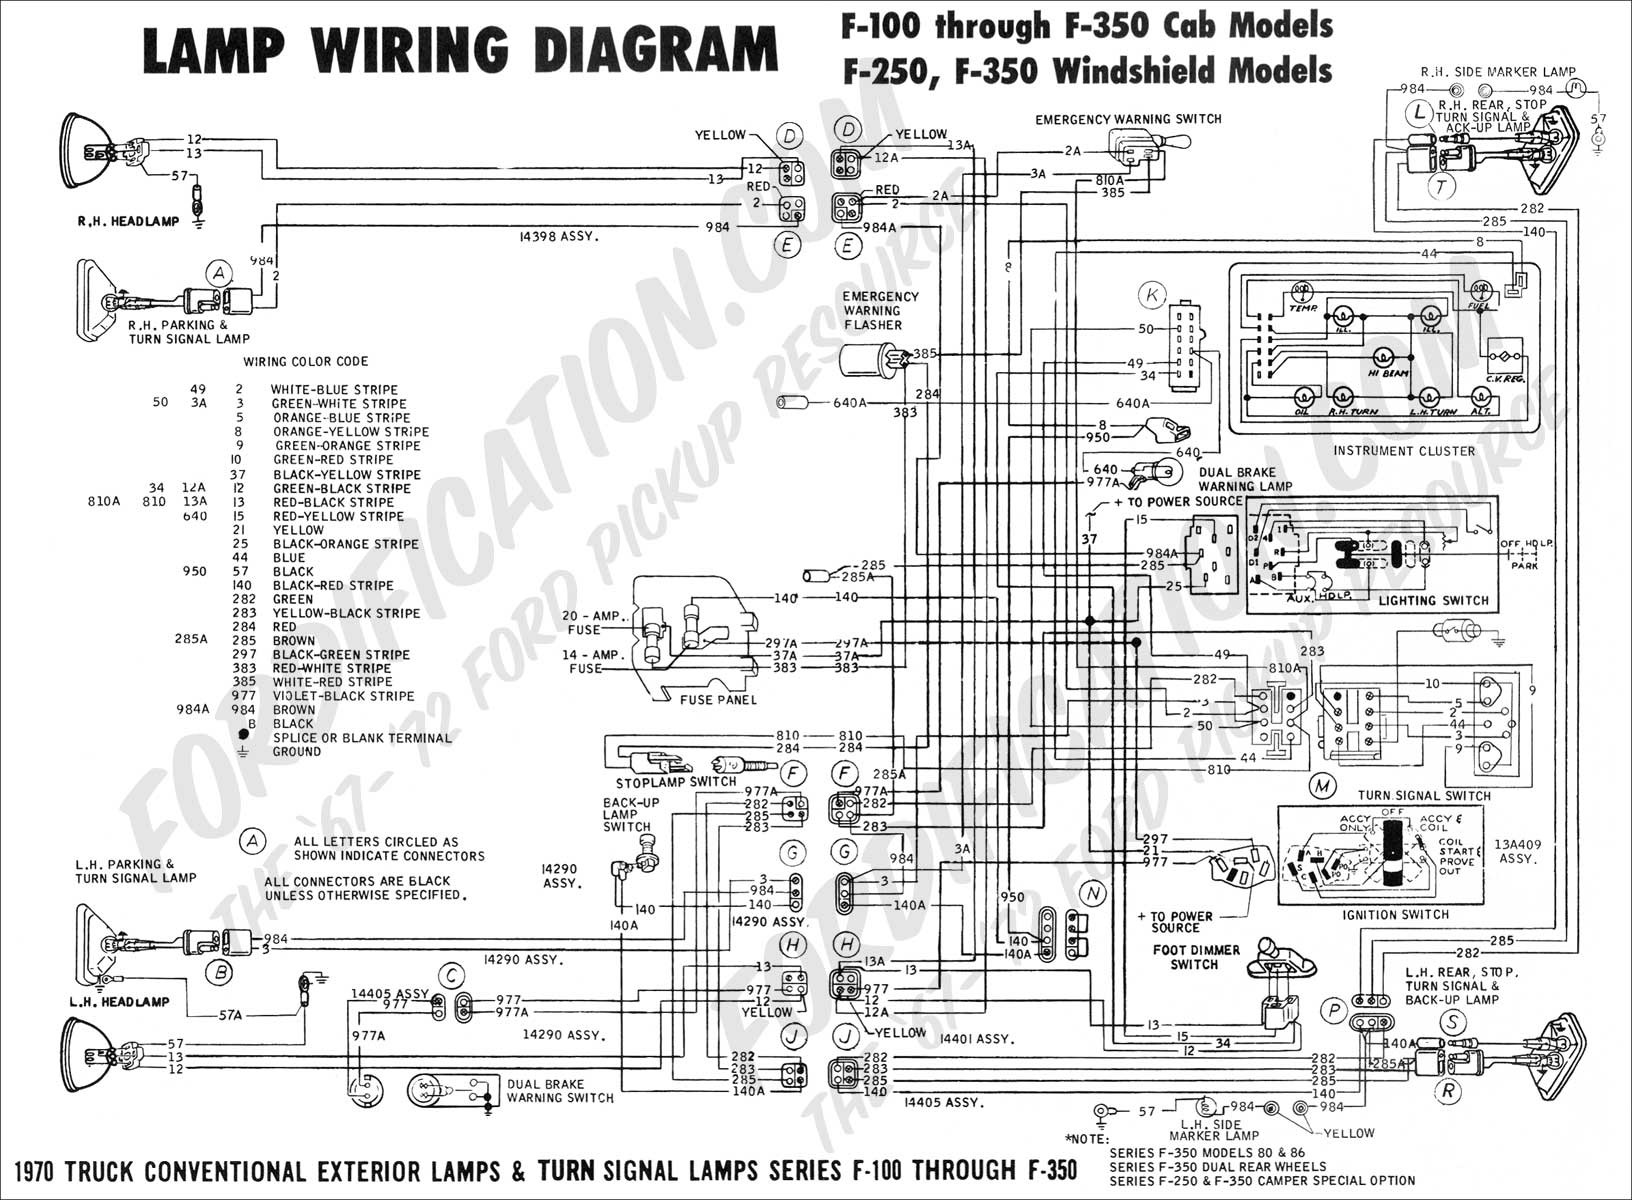 2003 Dodge Ram Tail Light Wiring Diagram ford F700 Wiring Diagrams Additionally Dodge Under Hood Wiring Of 2003 Dodge Ram Tail Light Wiring Diagram